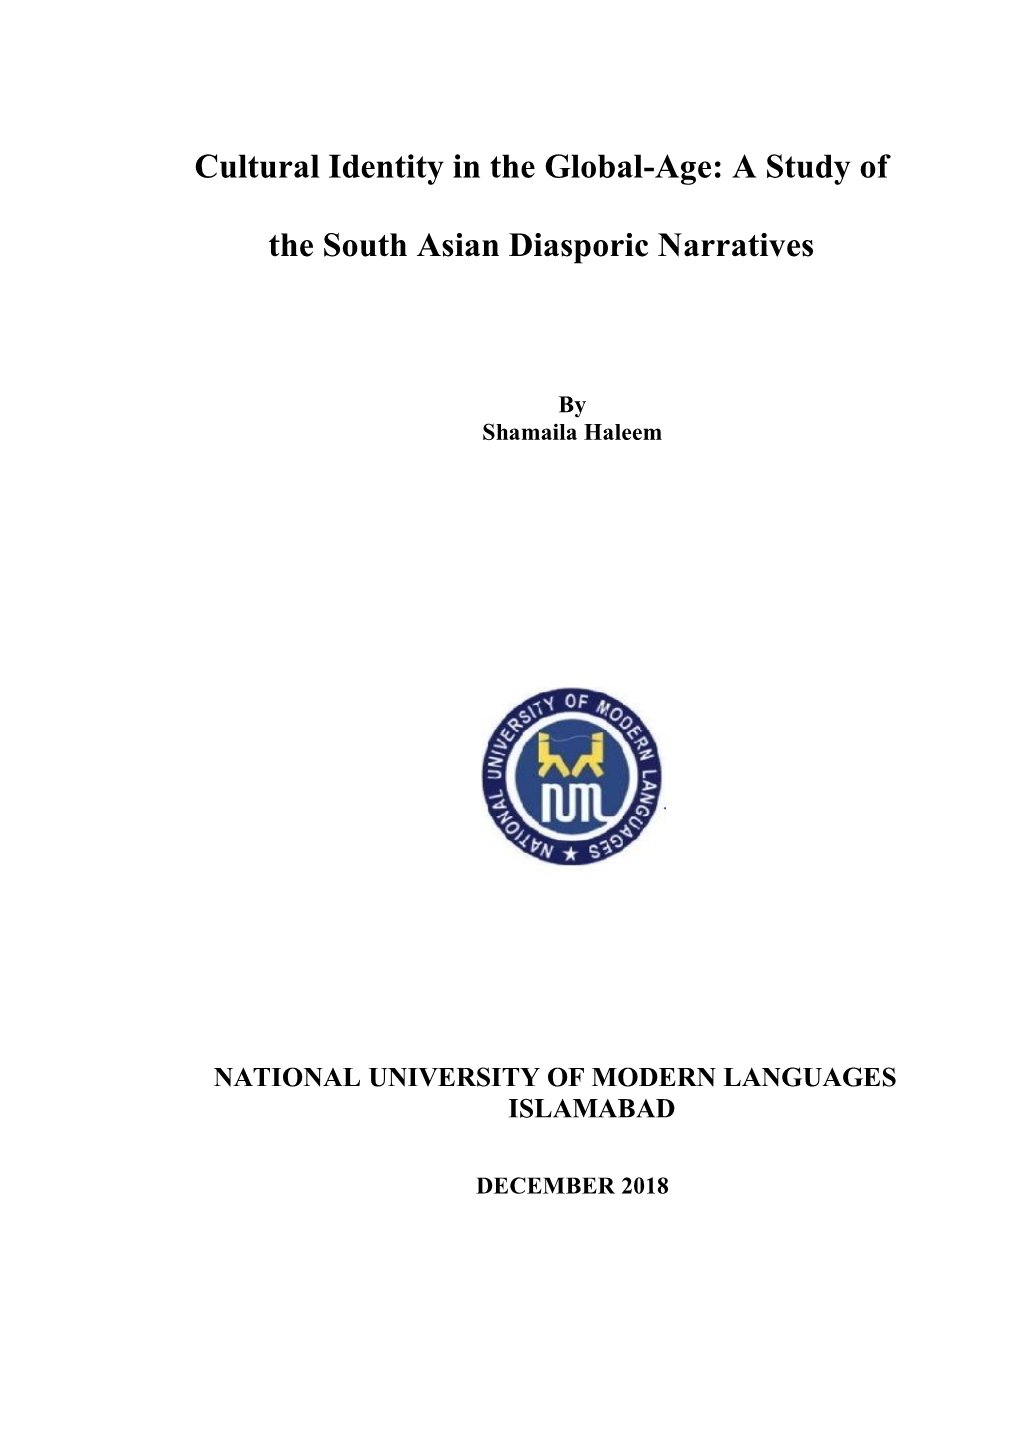 A Study of the South Asian Diasporic Narratives